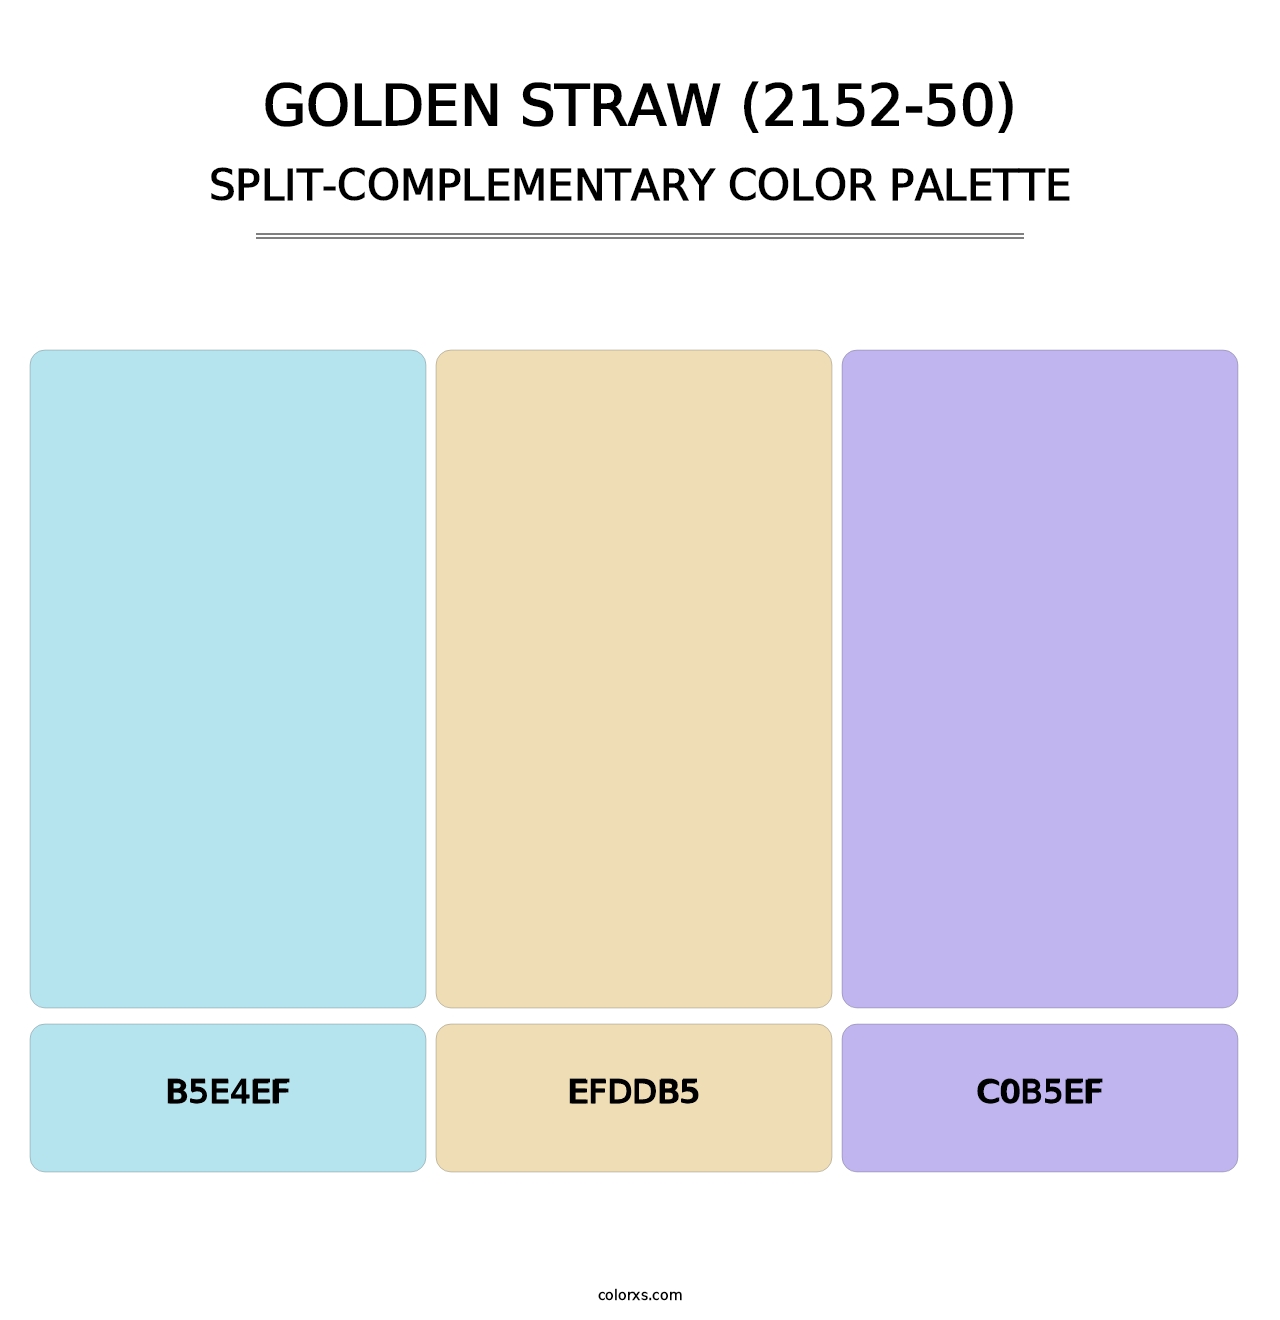 Golden Straw (2152-50) - Split-Complementary Color Palette